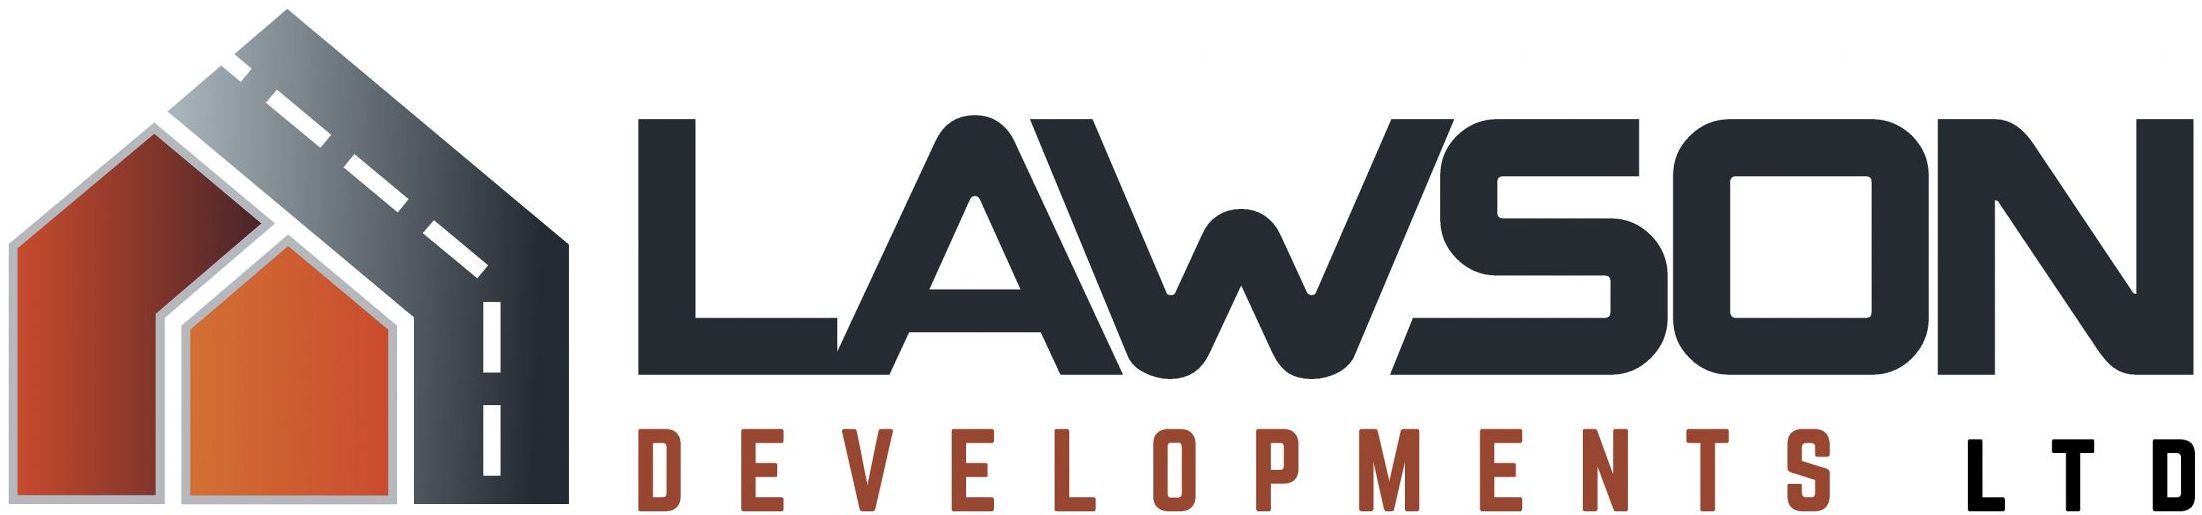 Lawson Developments Ltd.